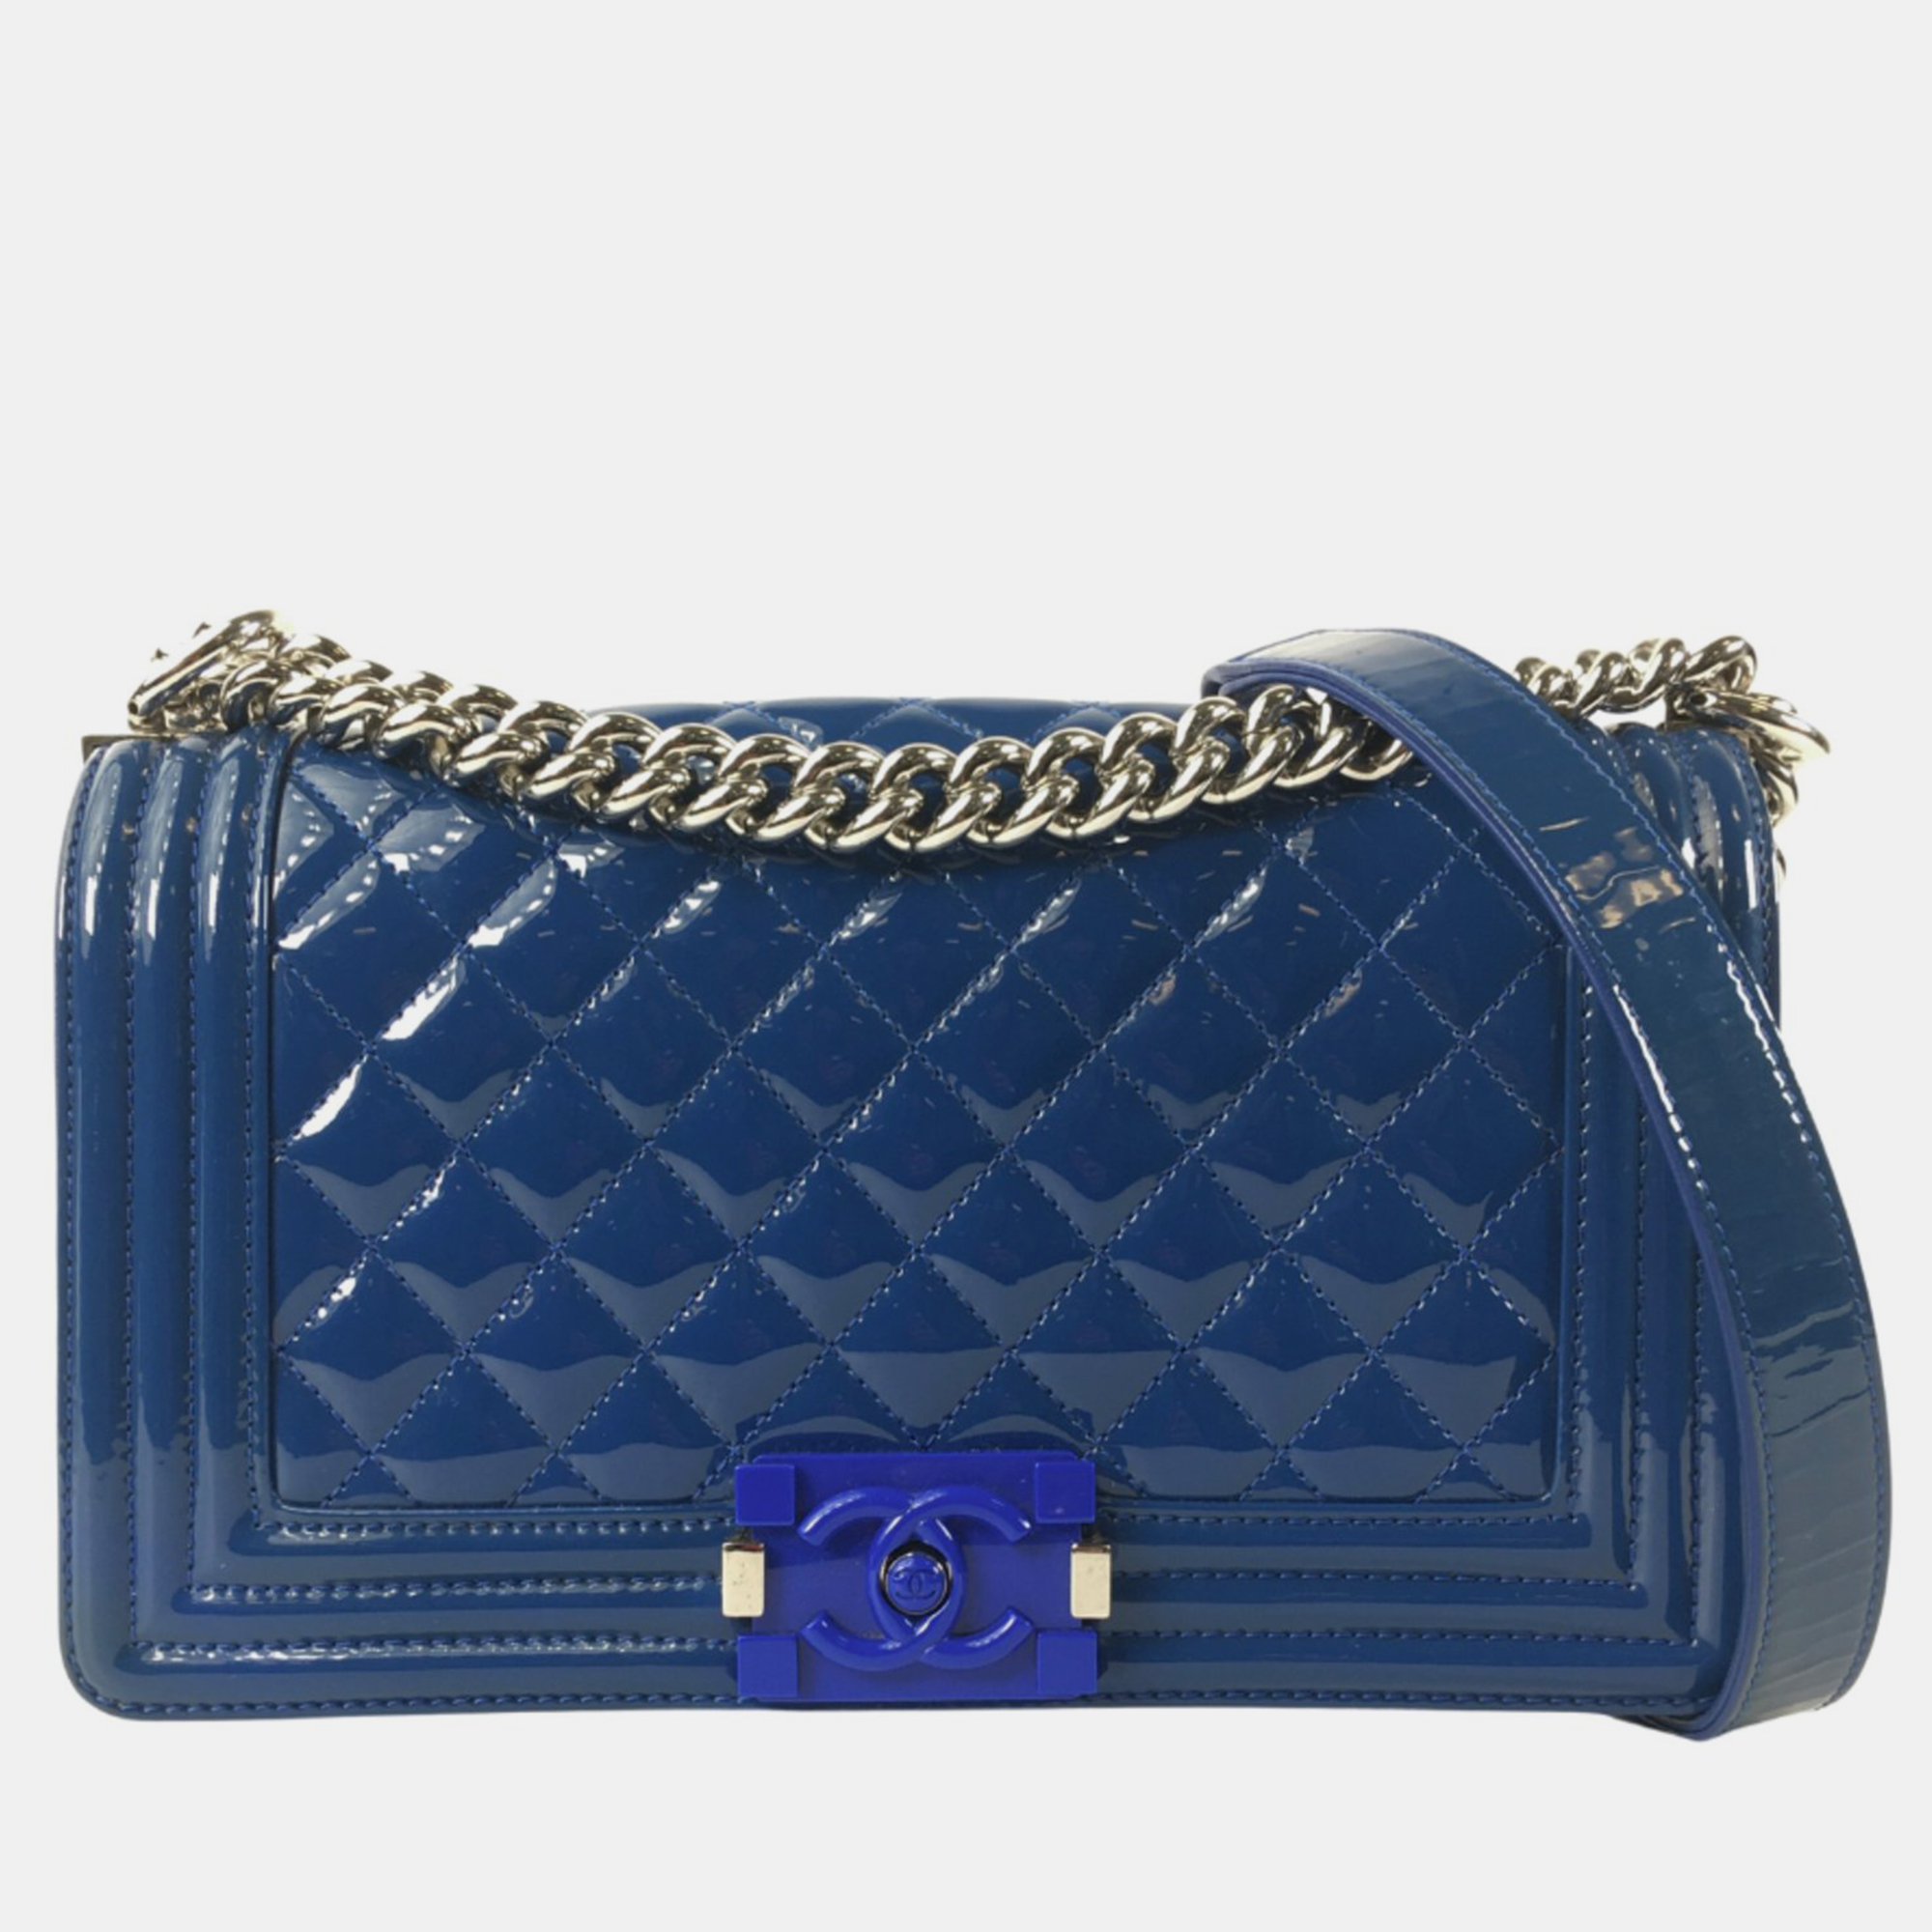 Chanel blue patent leather medium boy bag